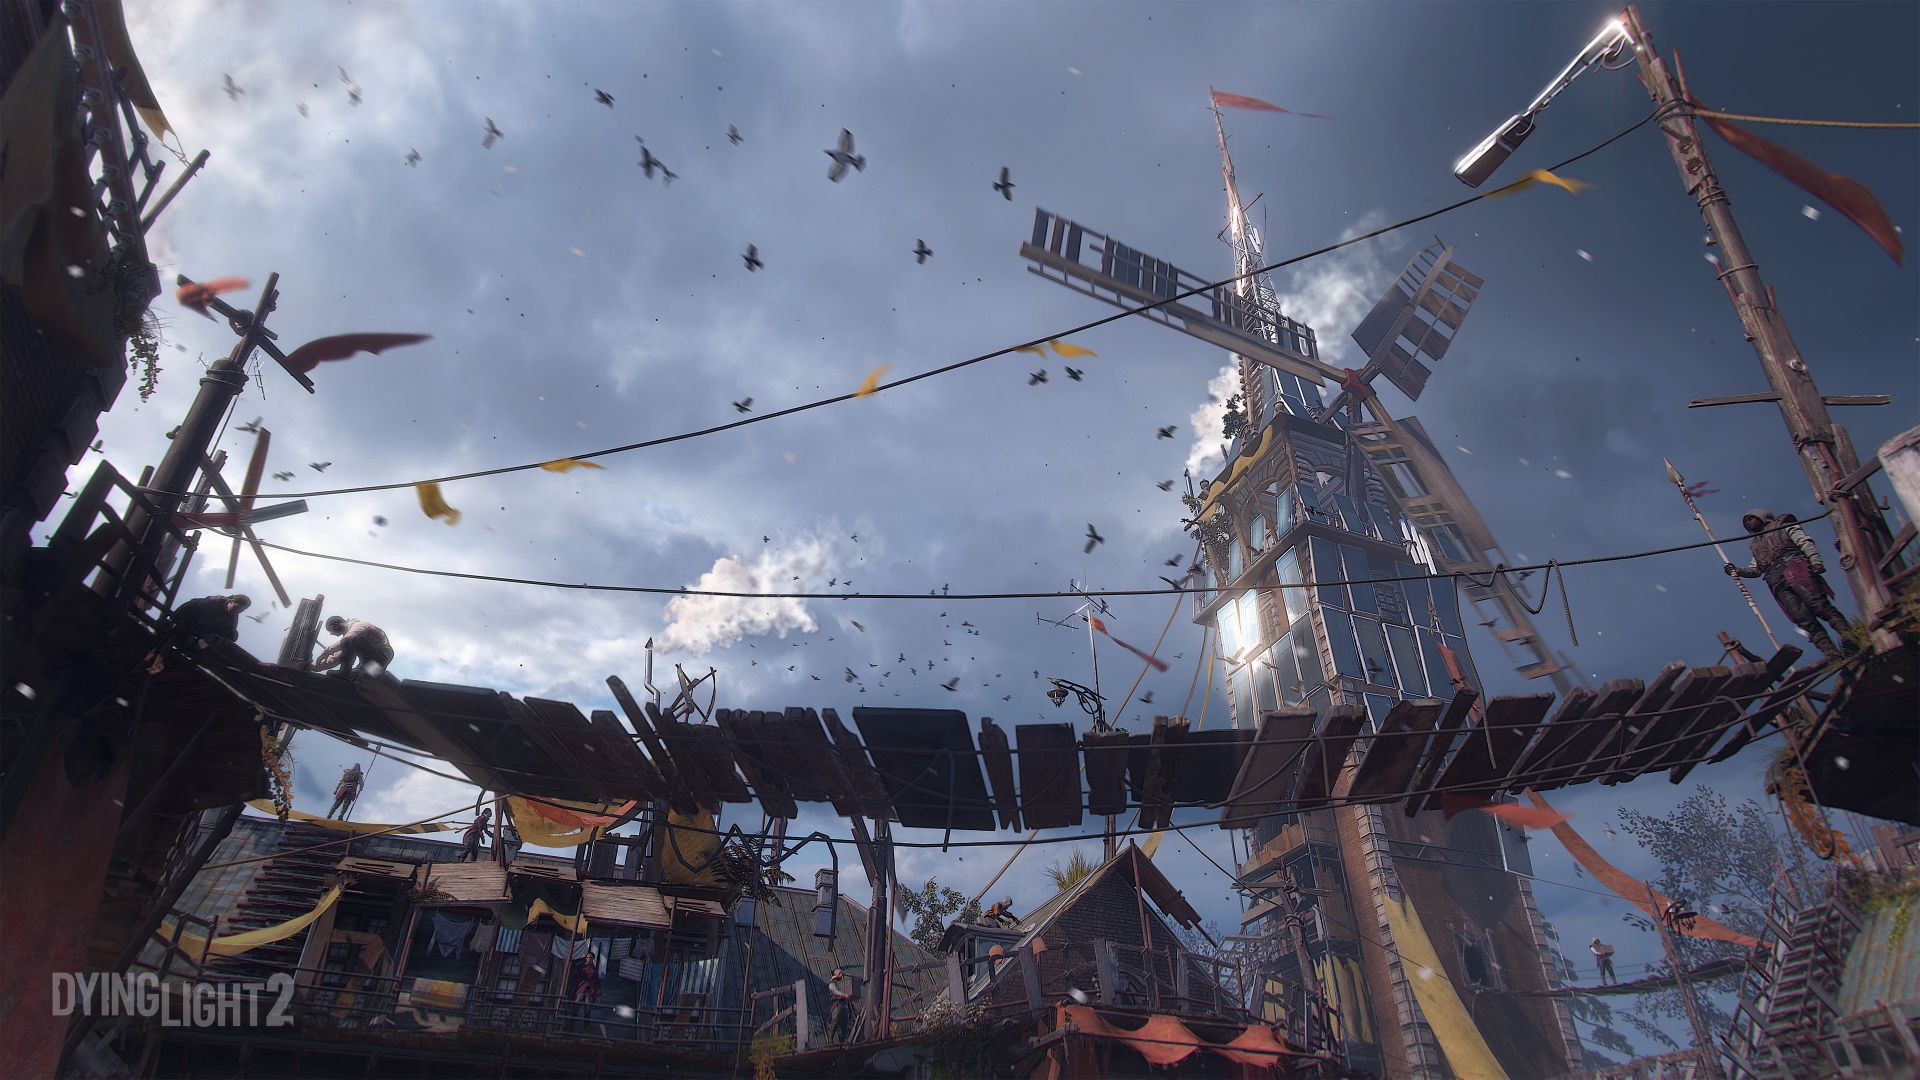 Даин Лайт 2, Dying Light 2, E3 2018, screenshot, 4K (horizontal)